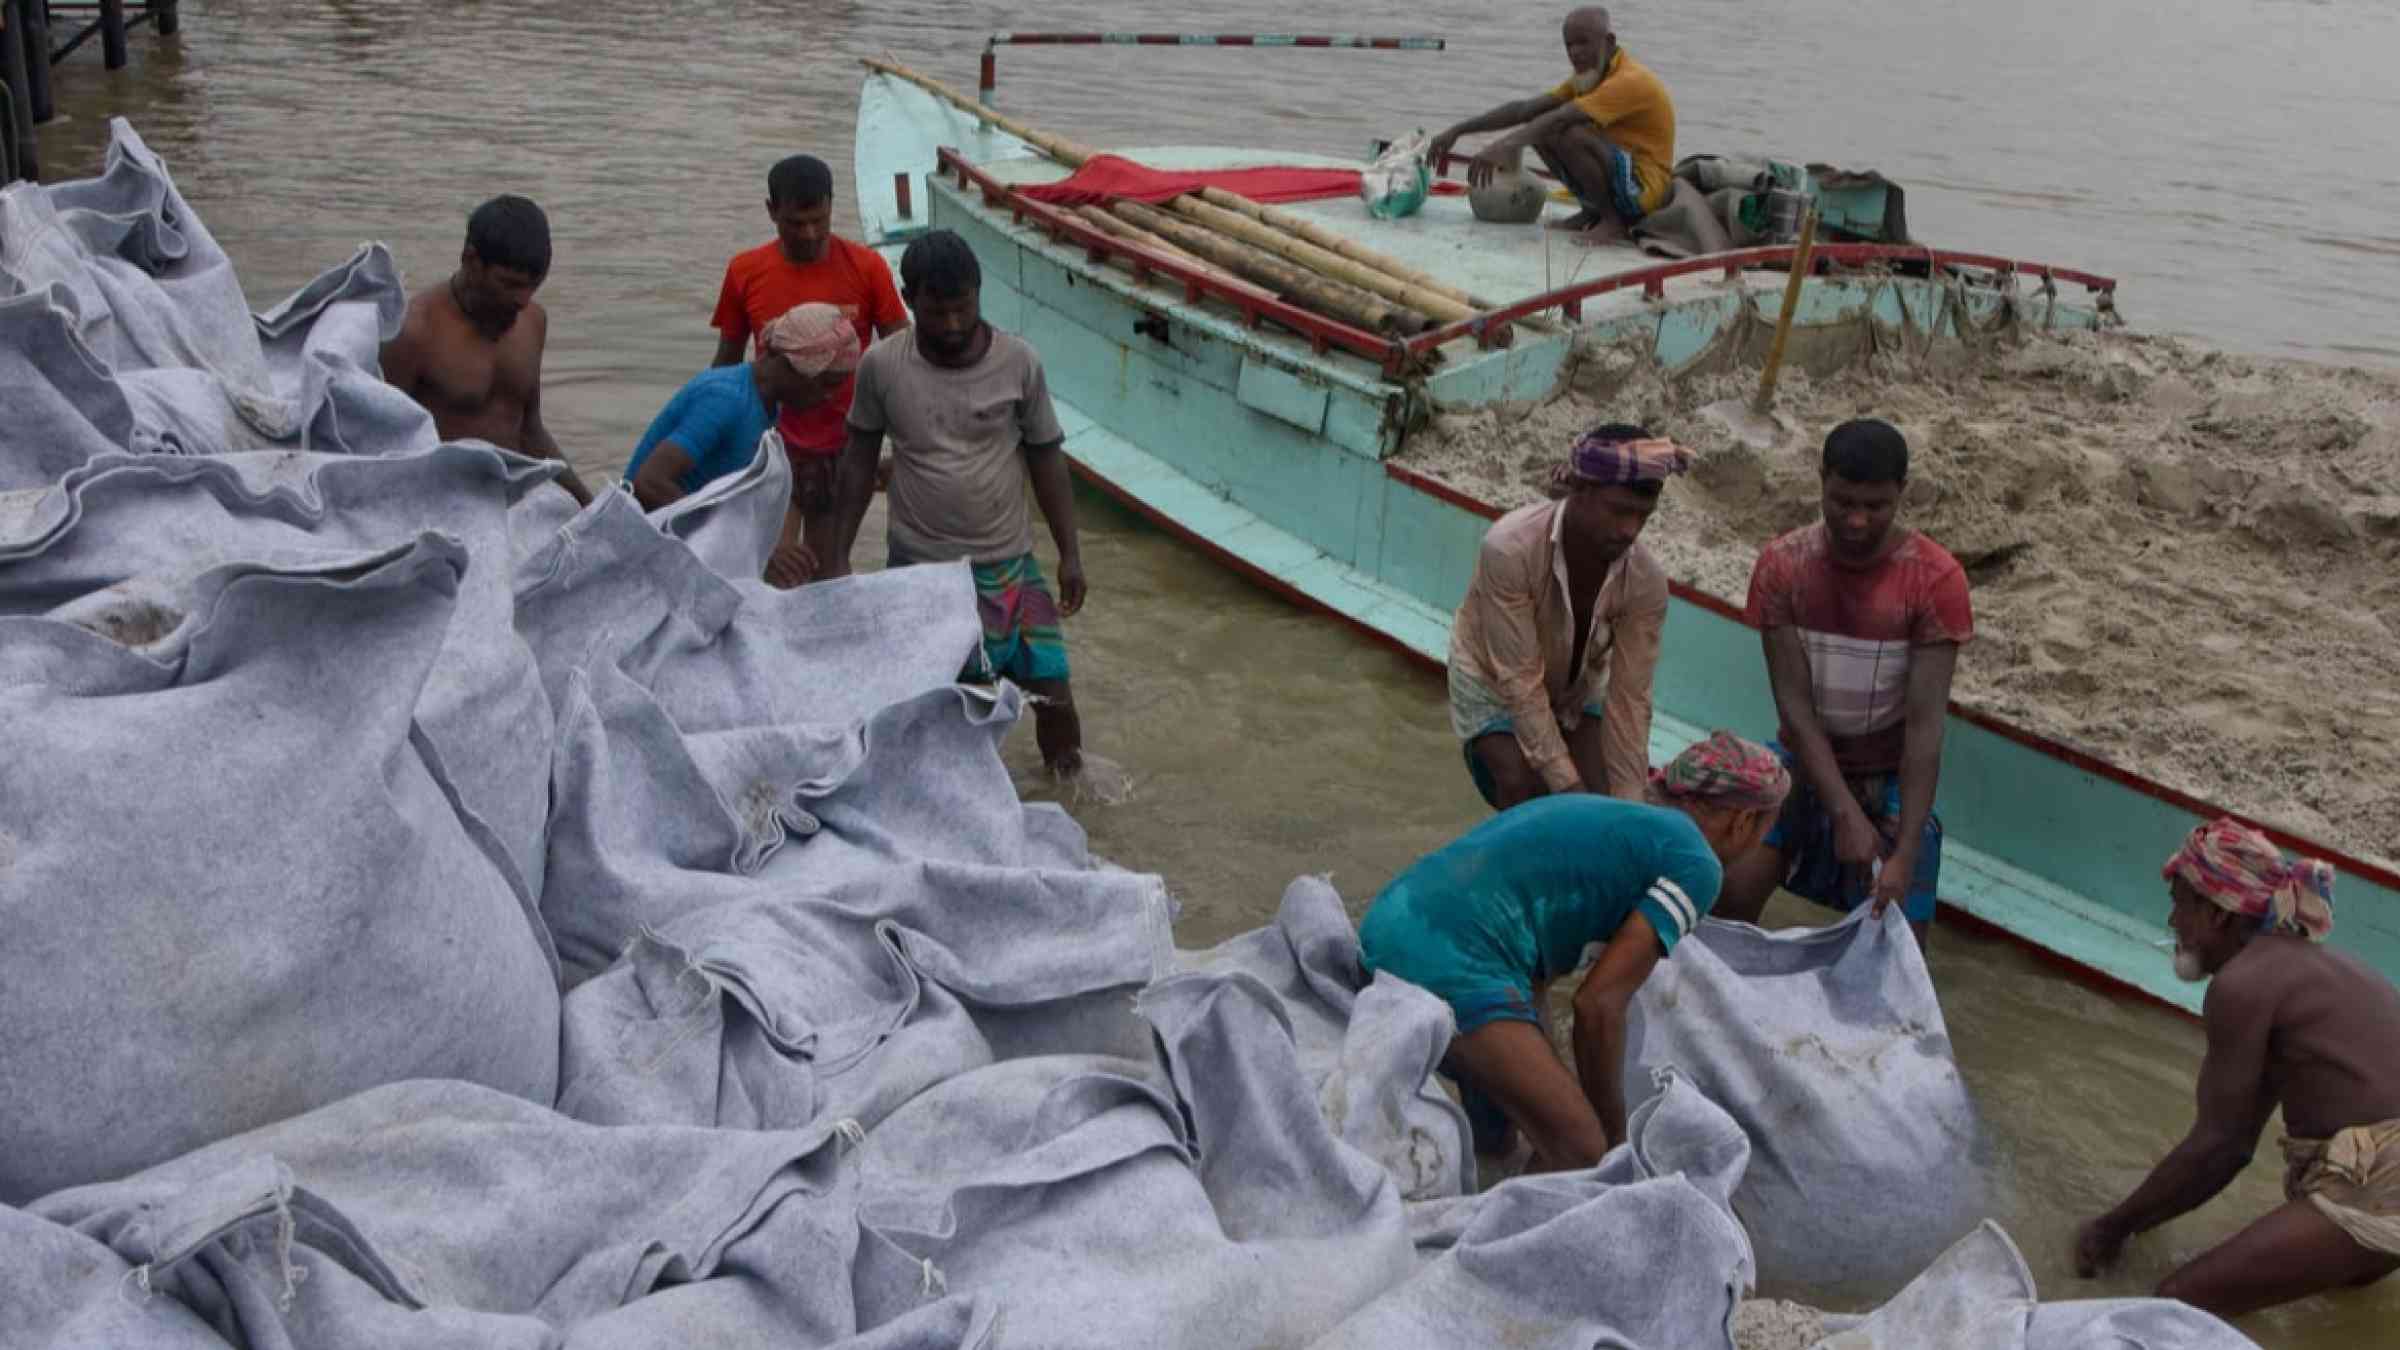 Workers prepare sandbags to repair the embankment near Dhaka, in Bangladesh (2020).